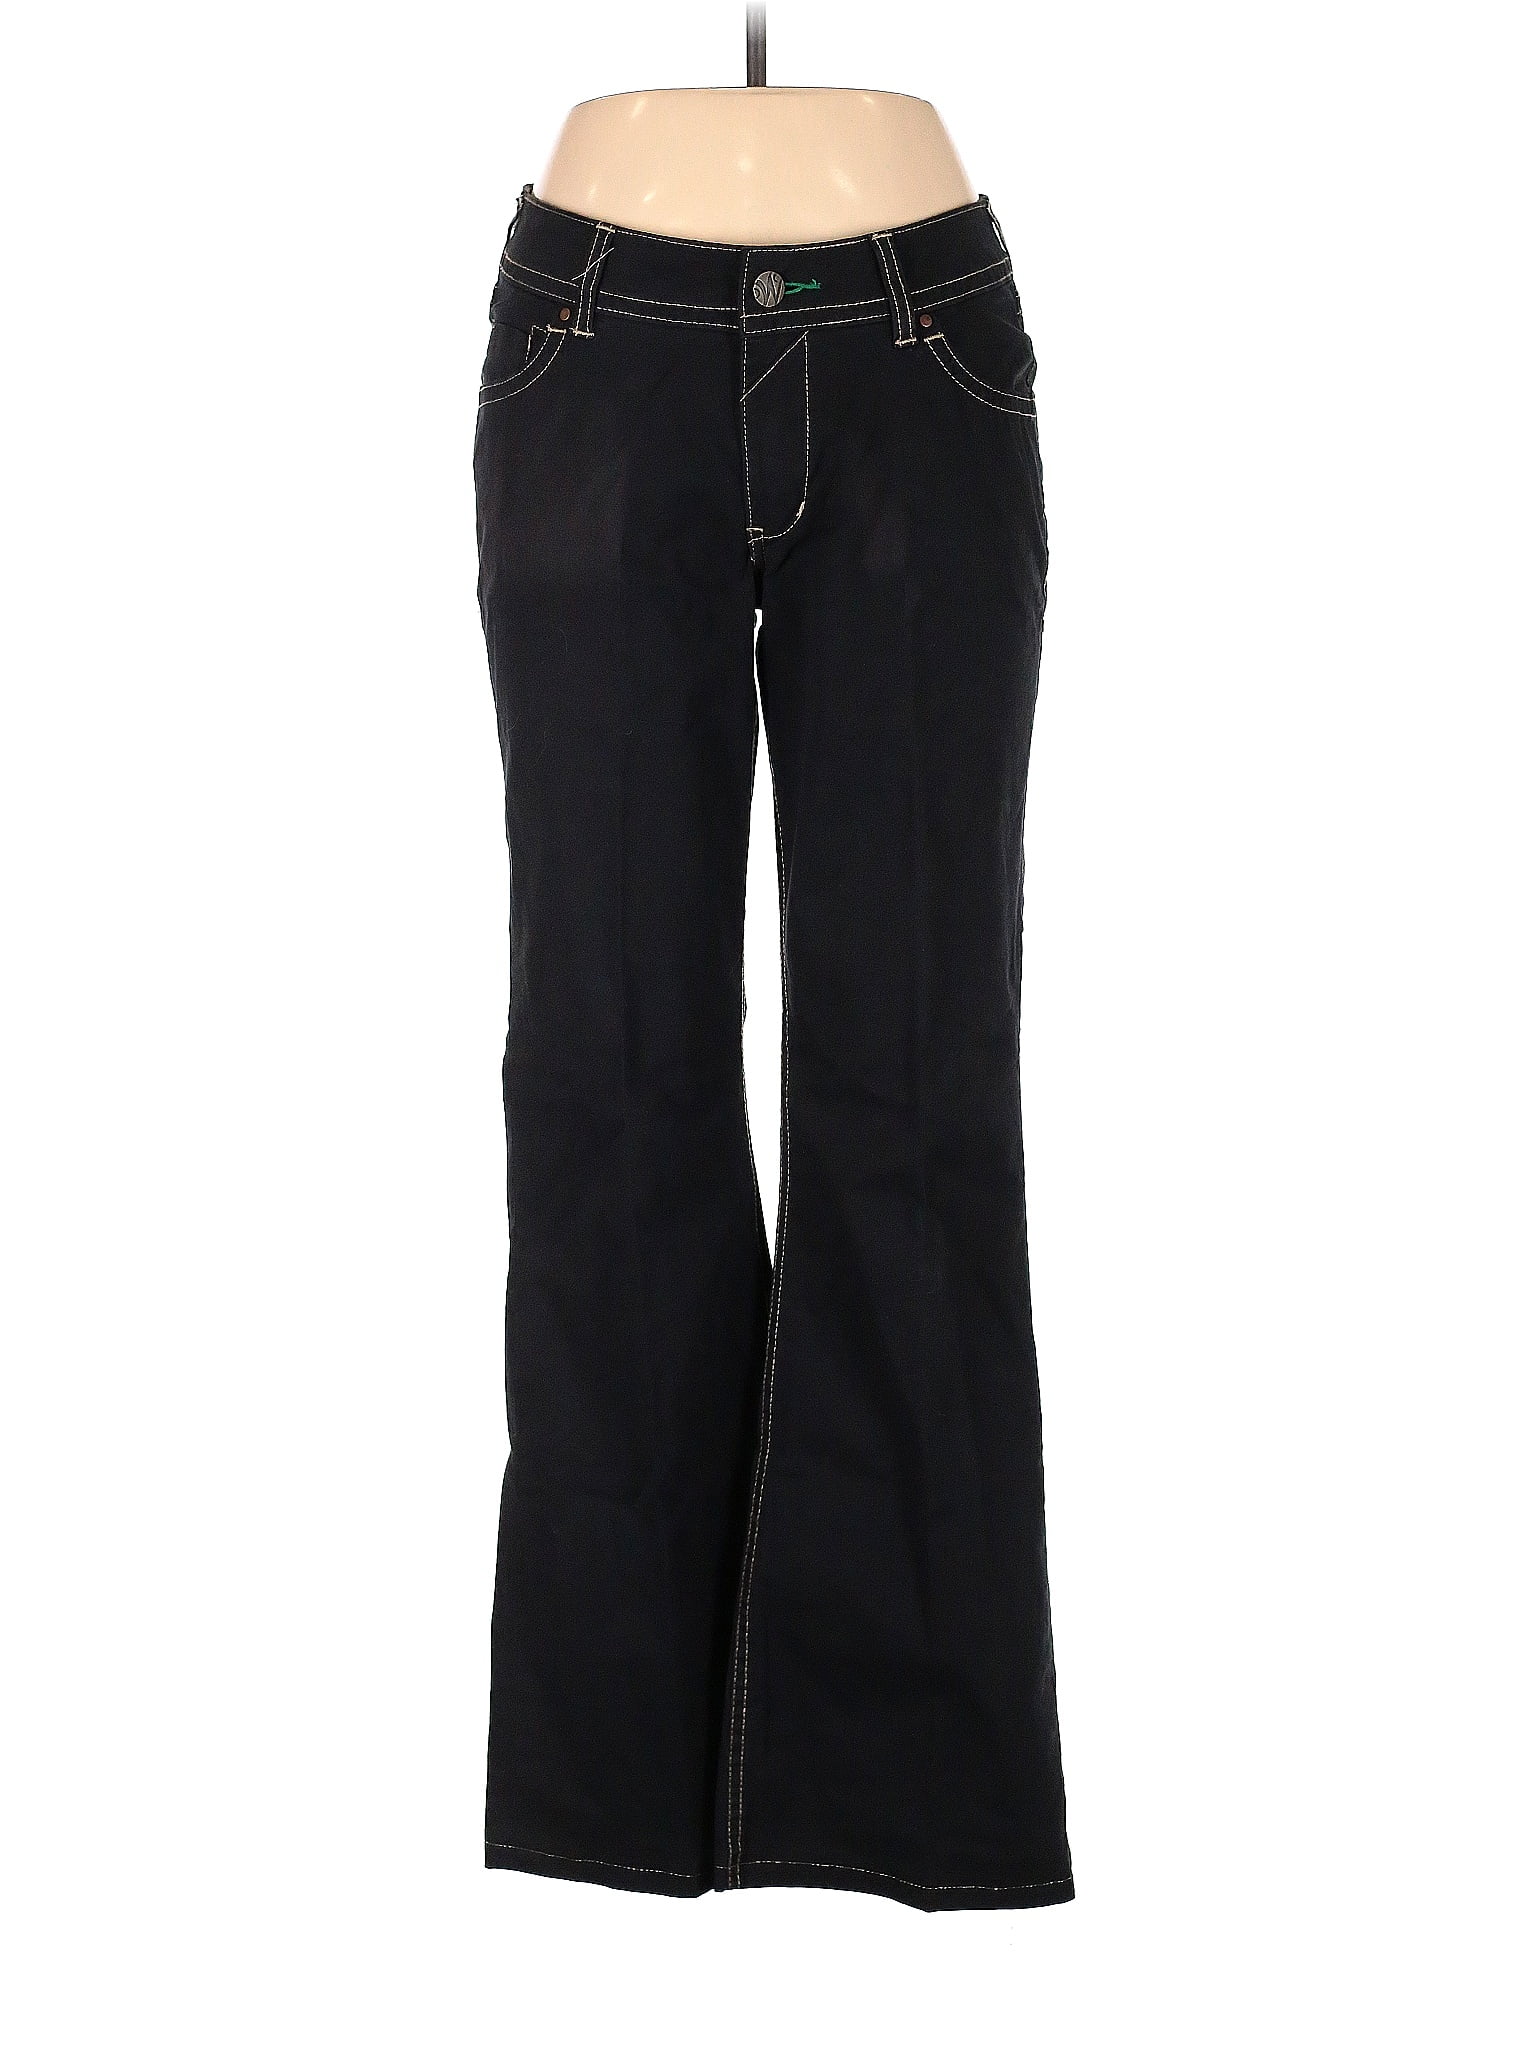 Worn Solid Black Jeans Size 10 - 63% off | thredUP